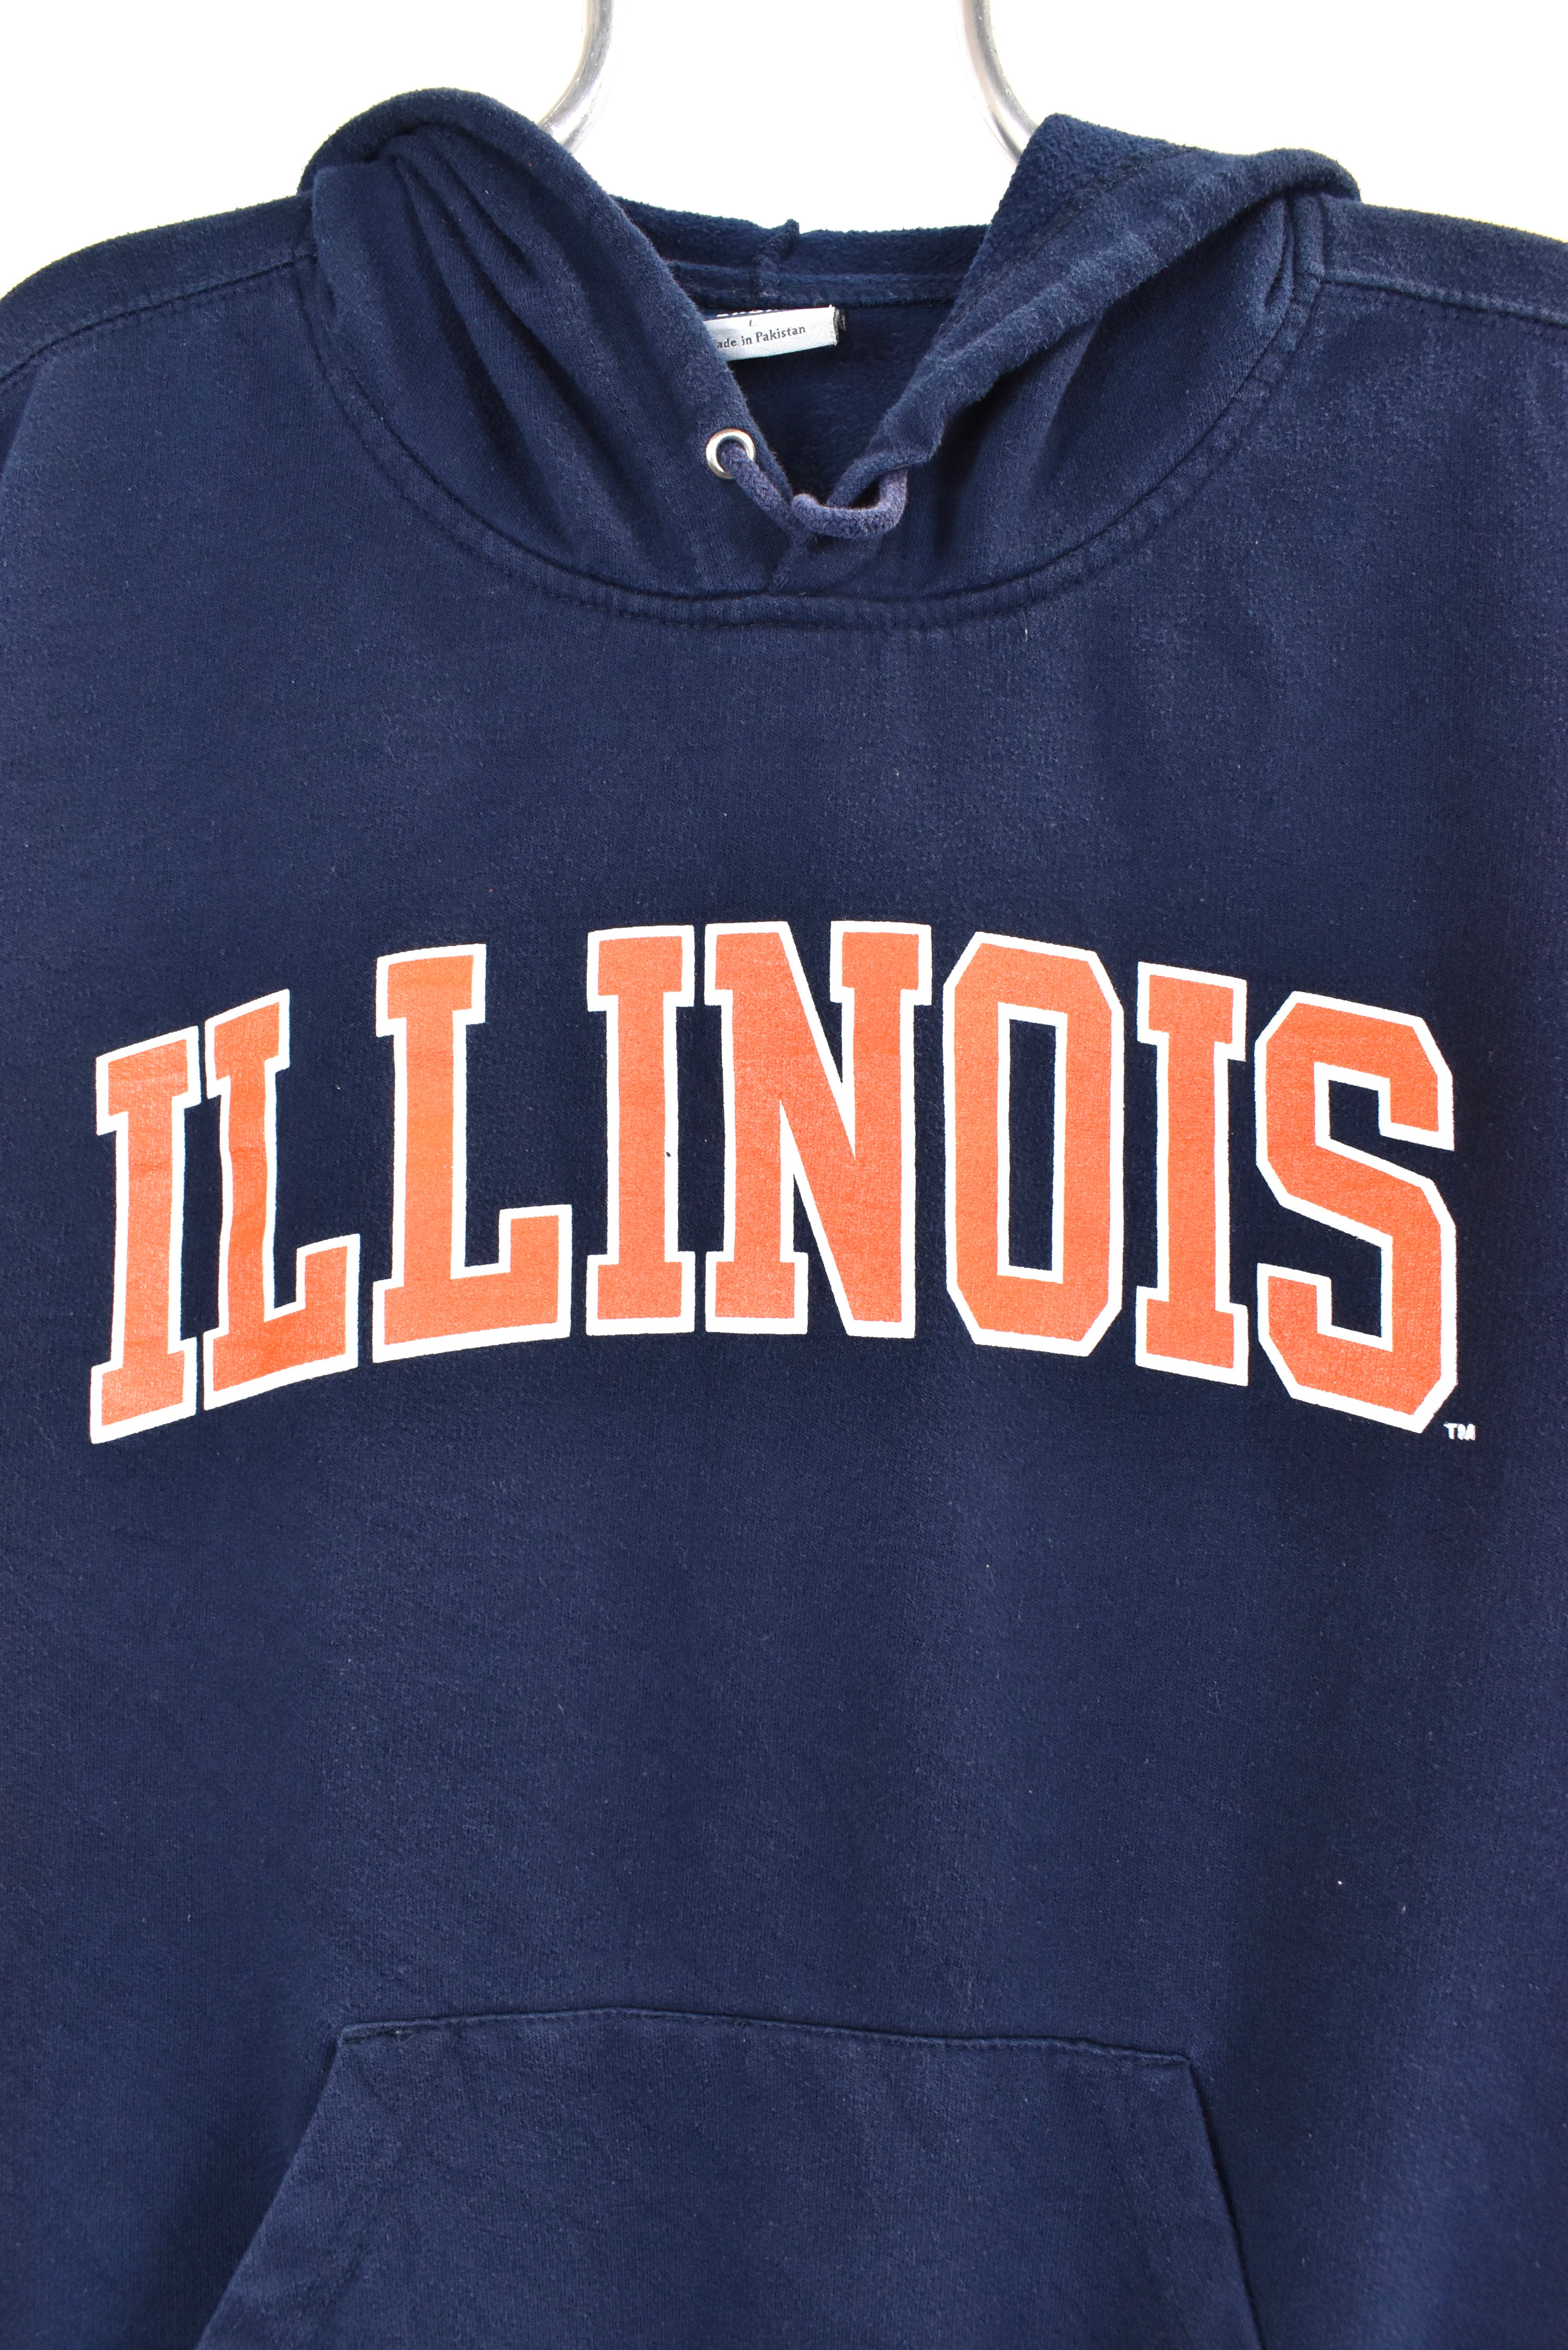 Vintage University of Illinois hoodie, navy blue graphic sweatshirt - AU Large COLLEGE